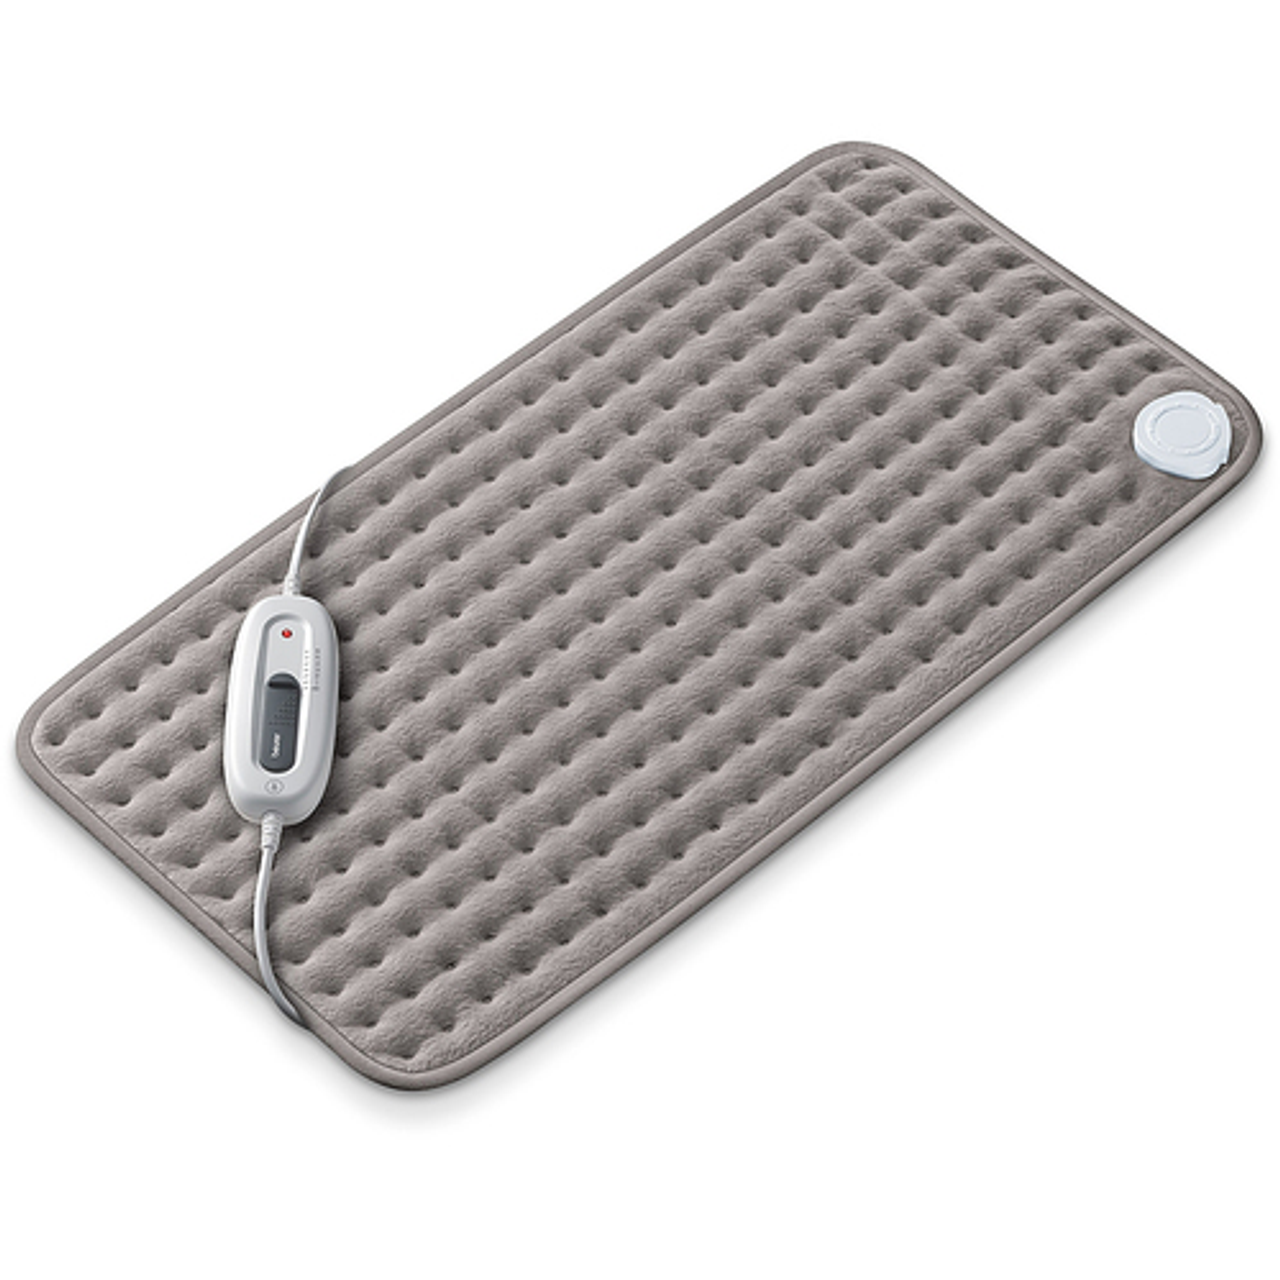 Beurer - Large Ultra-Soft Heating Pad - Light Gray